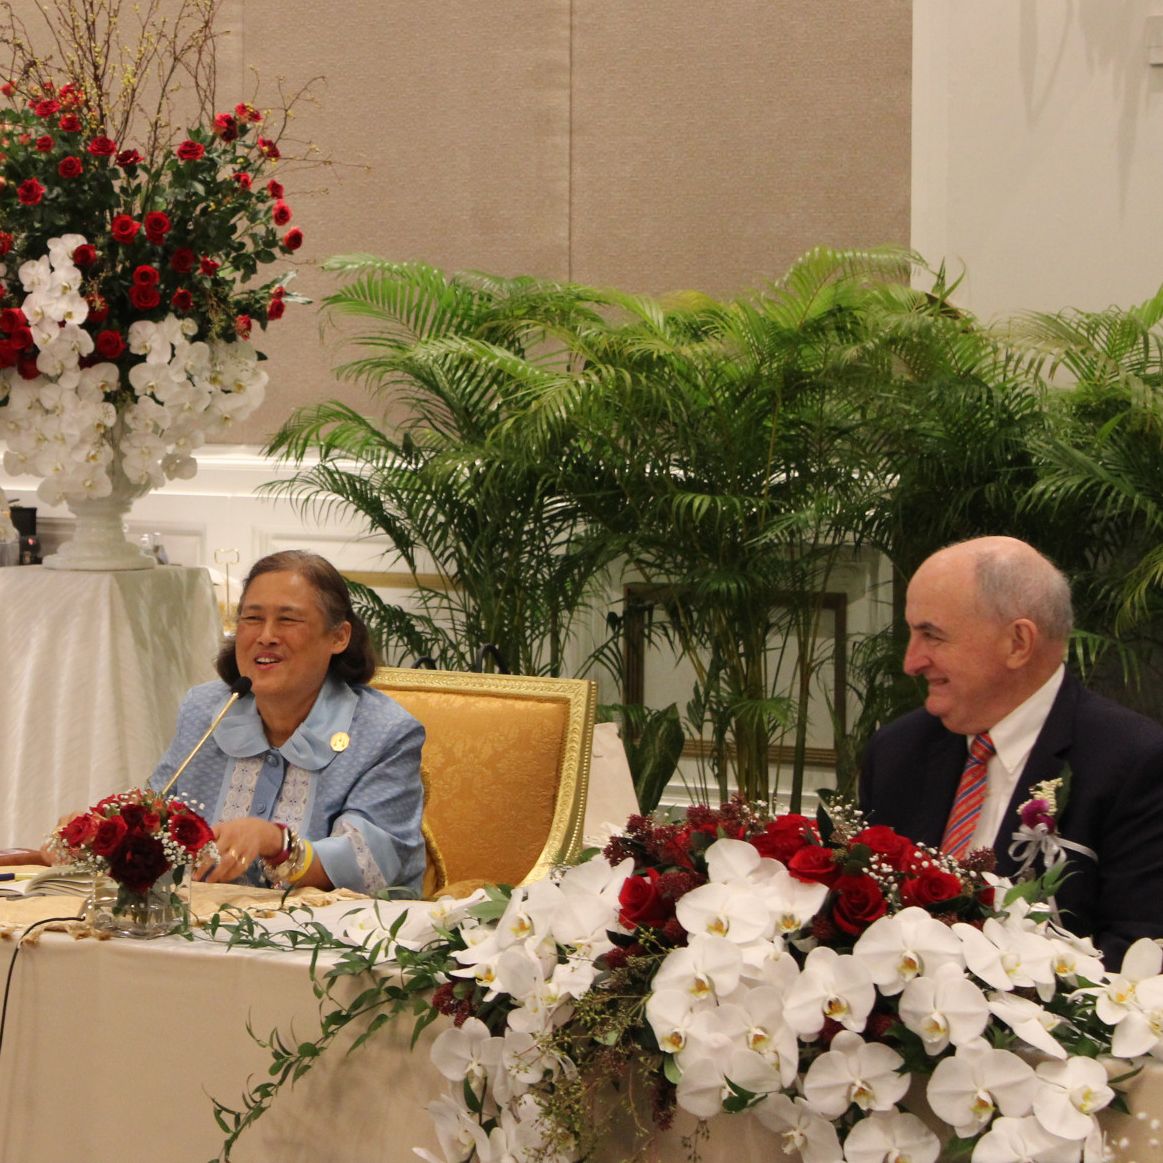 Princess Sirindhorn sits next to IU President Michael McRobbie. 